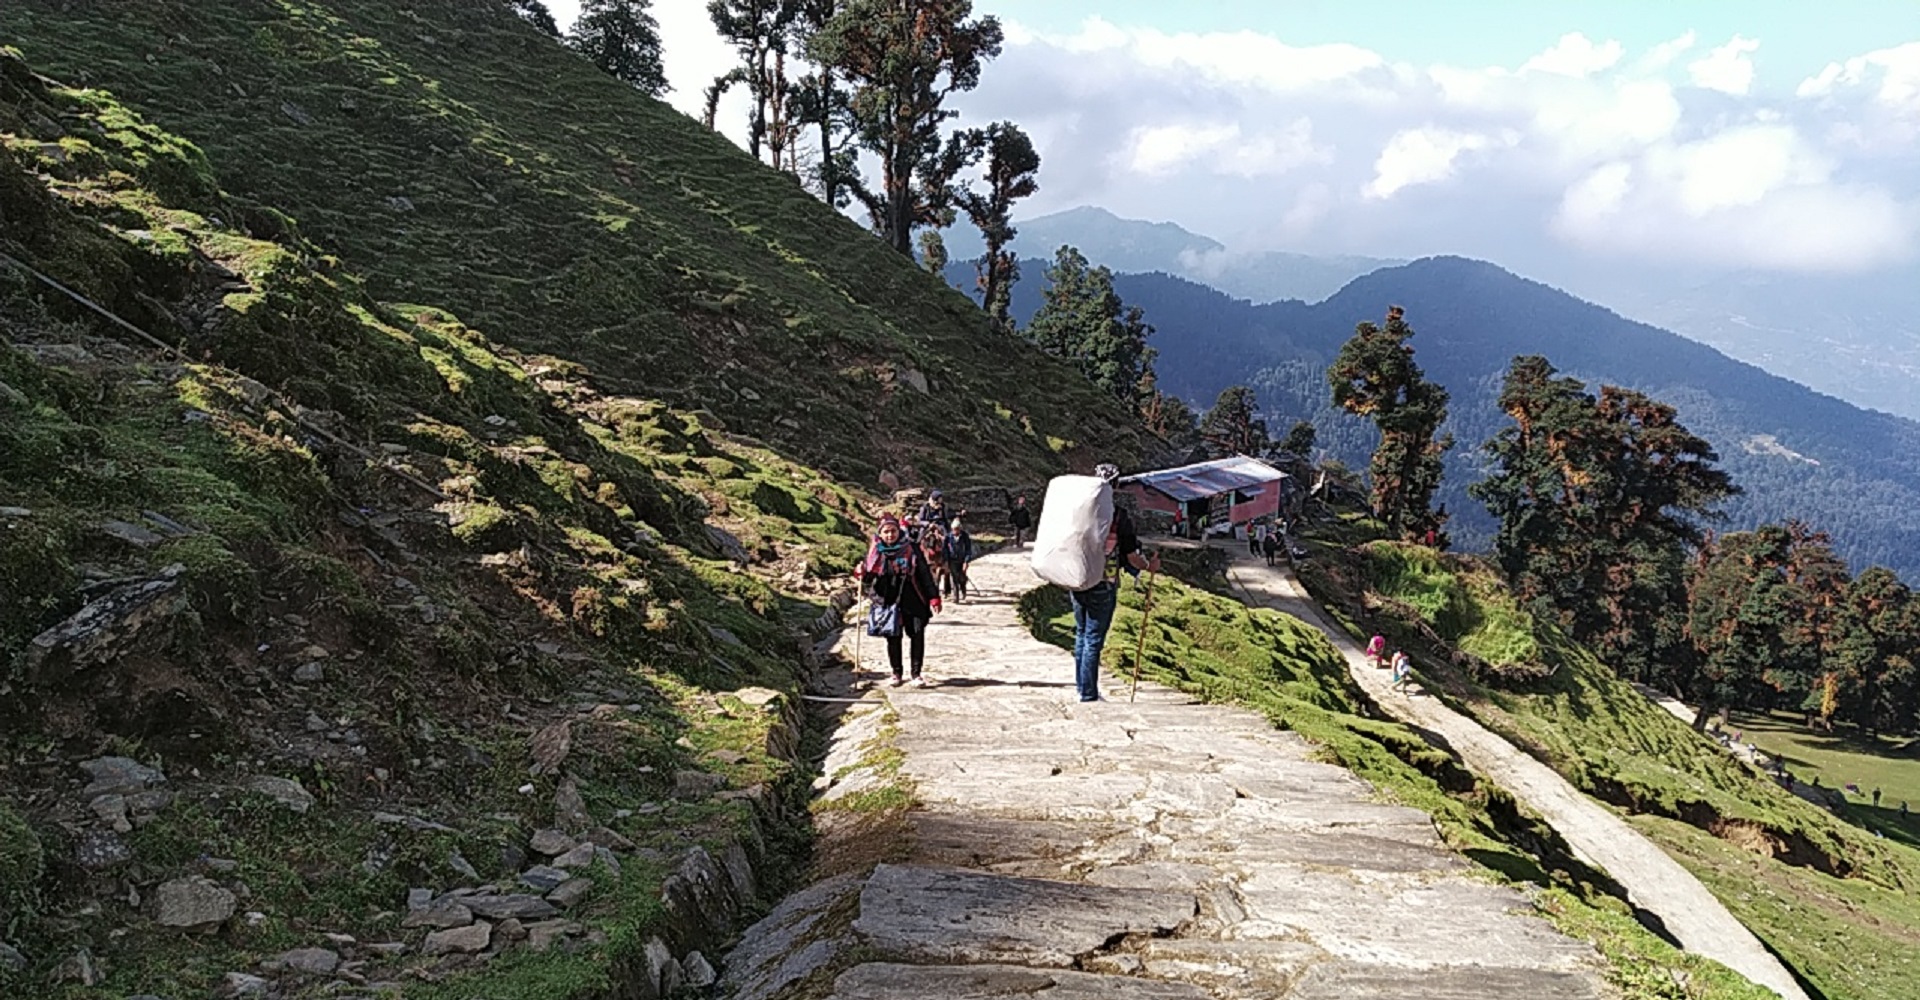 CHOPTA: Uttarakhand’s Serene, Unsung, Natural Paradise